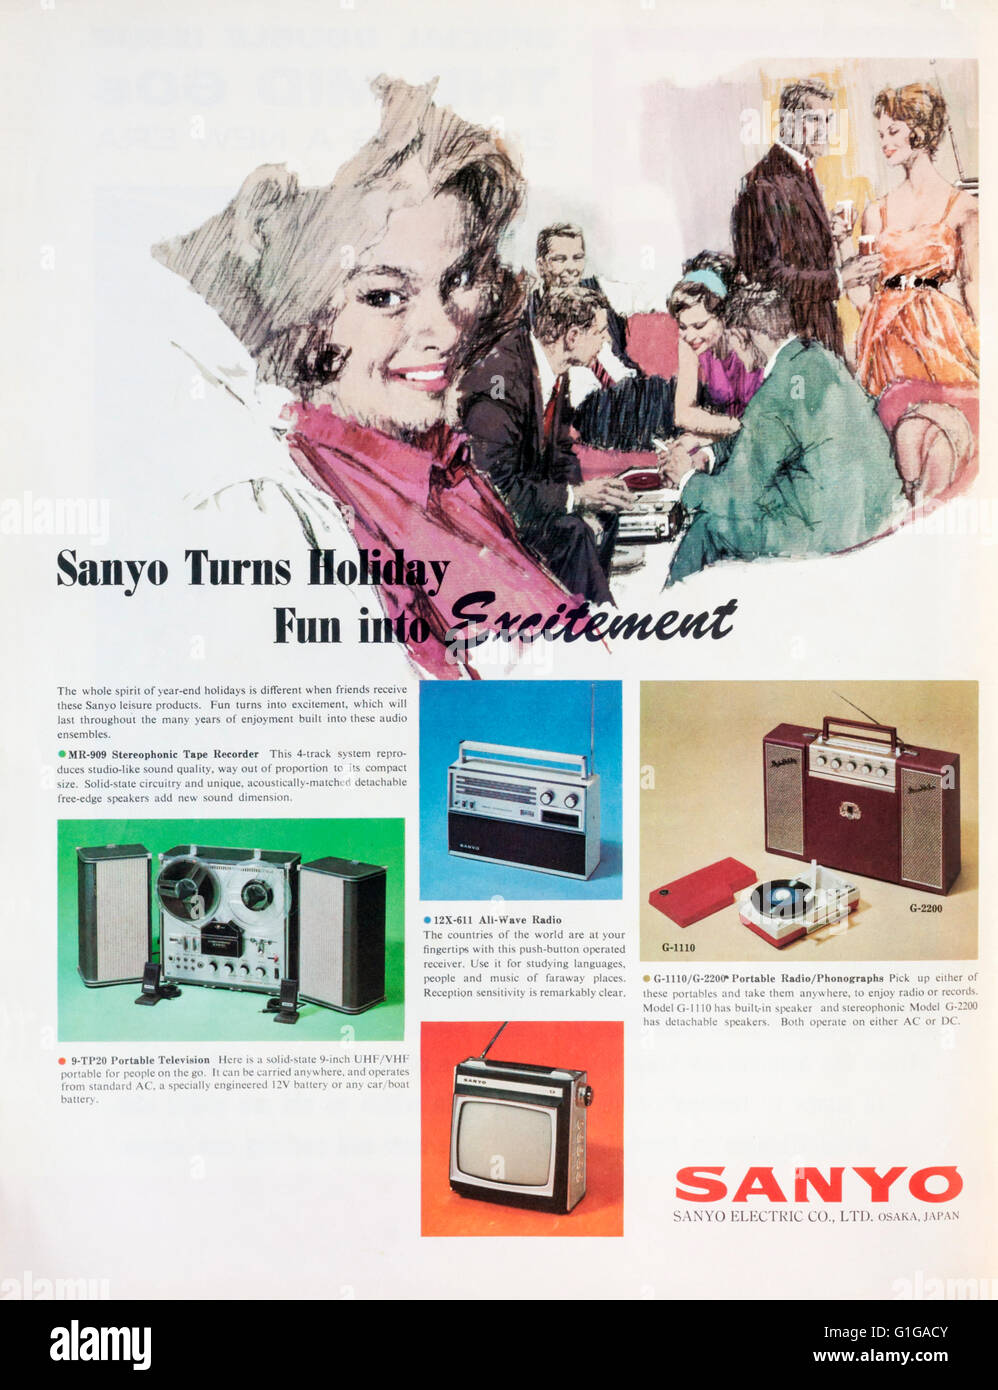 1960s magazine advertisement advertising Sanyo electronic equipment. Stock Photo